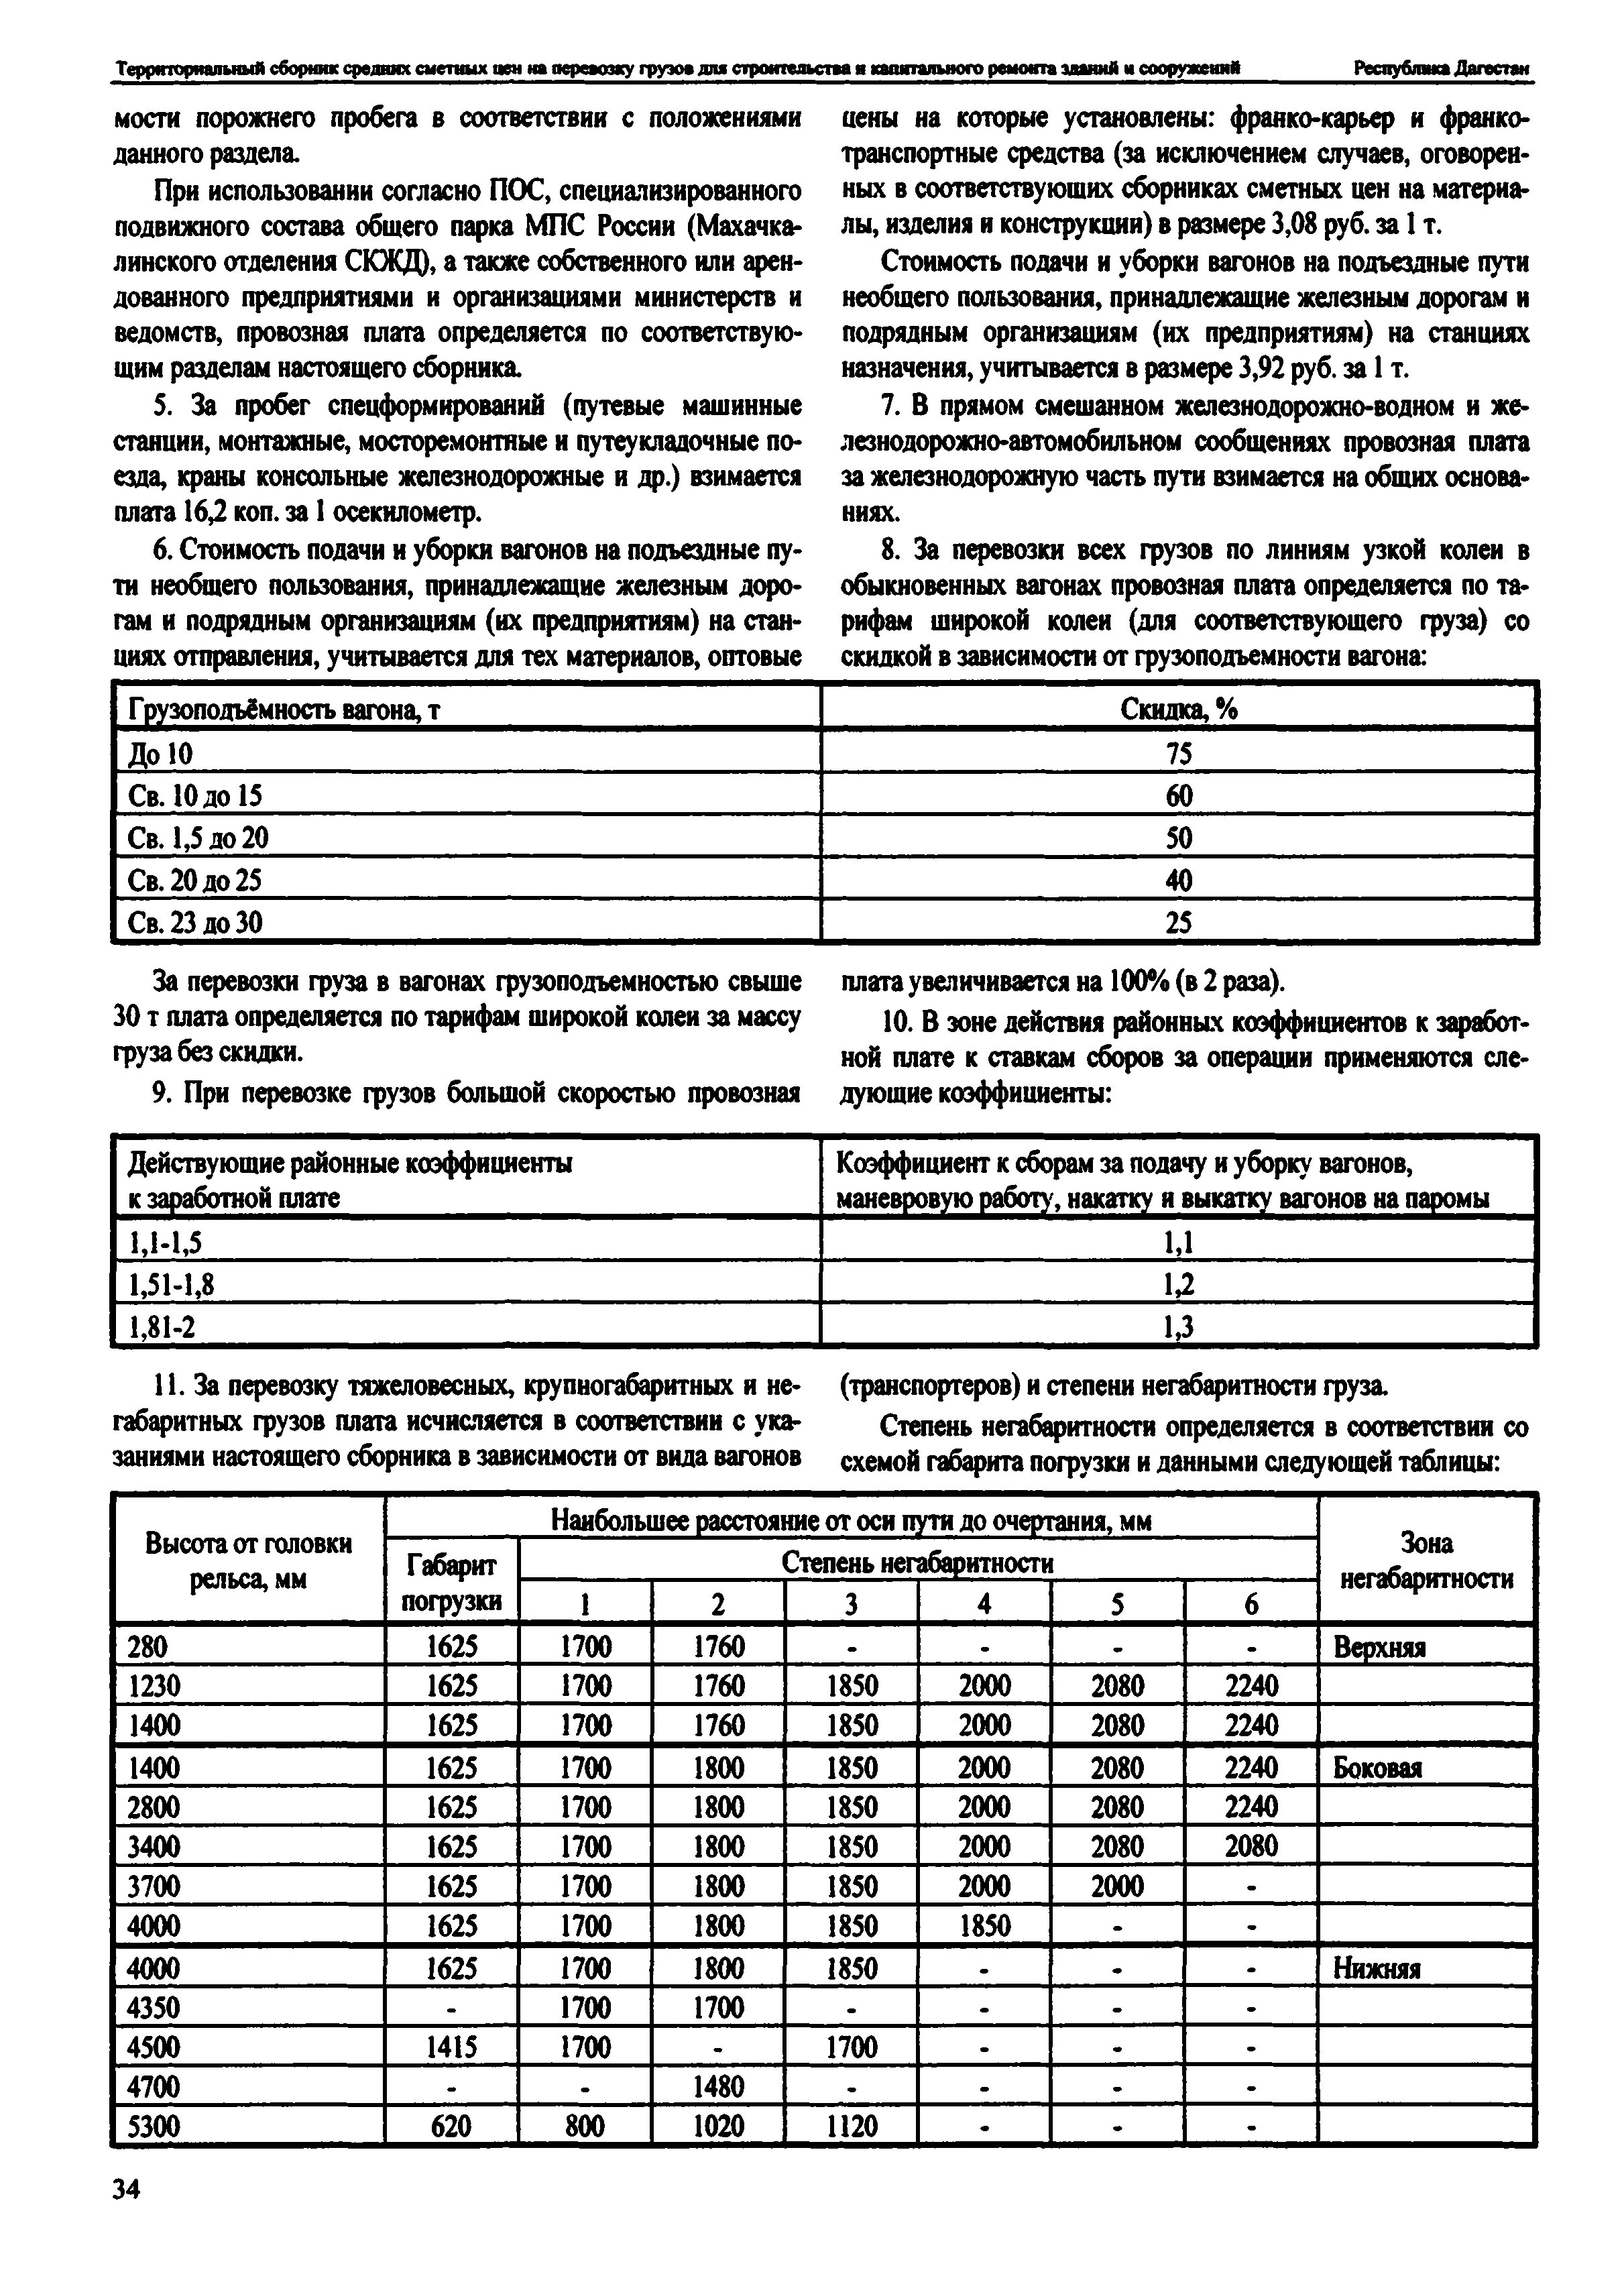 ТСЦ Республика Дагестан 81-01-2001